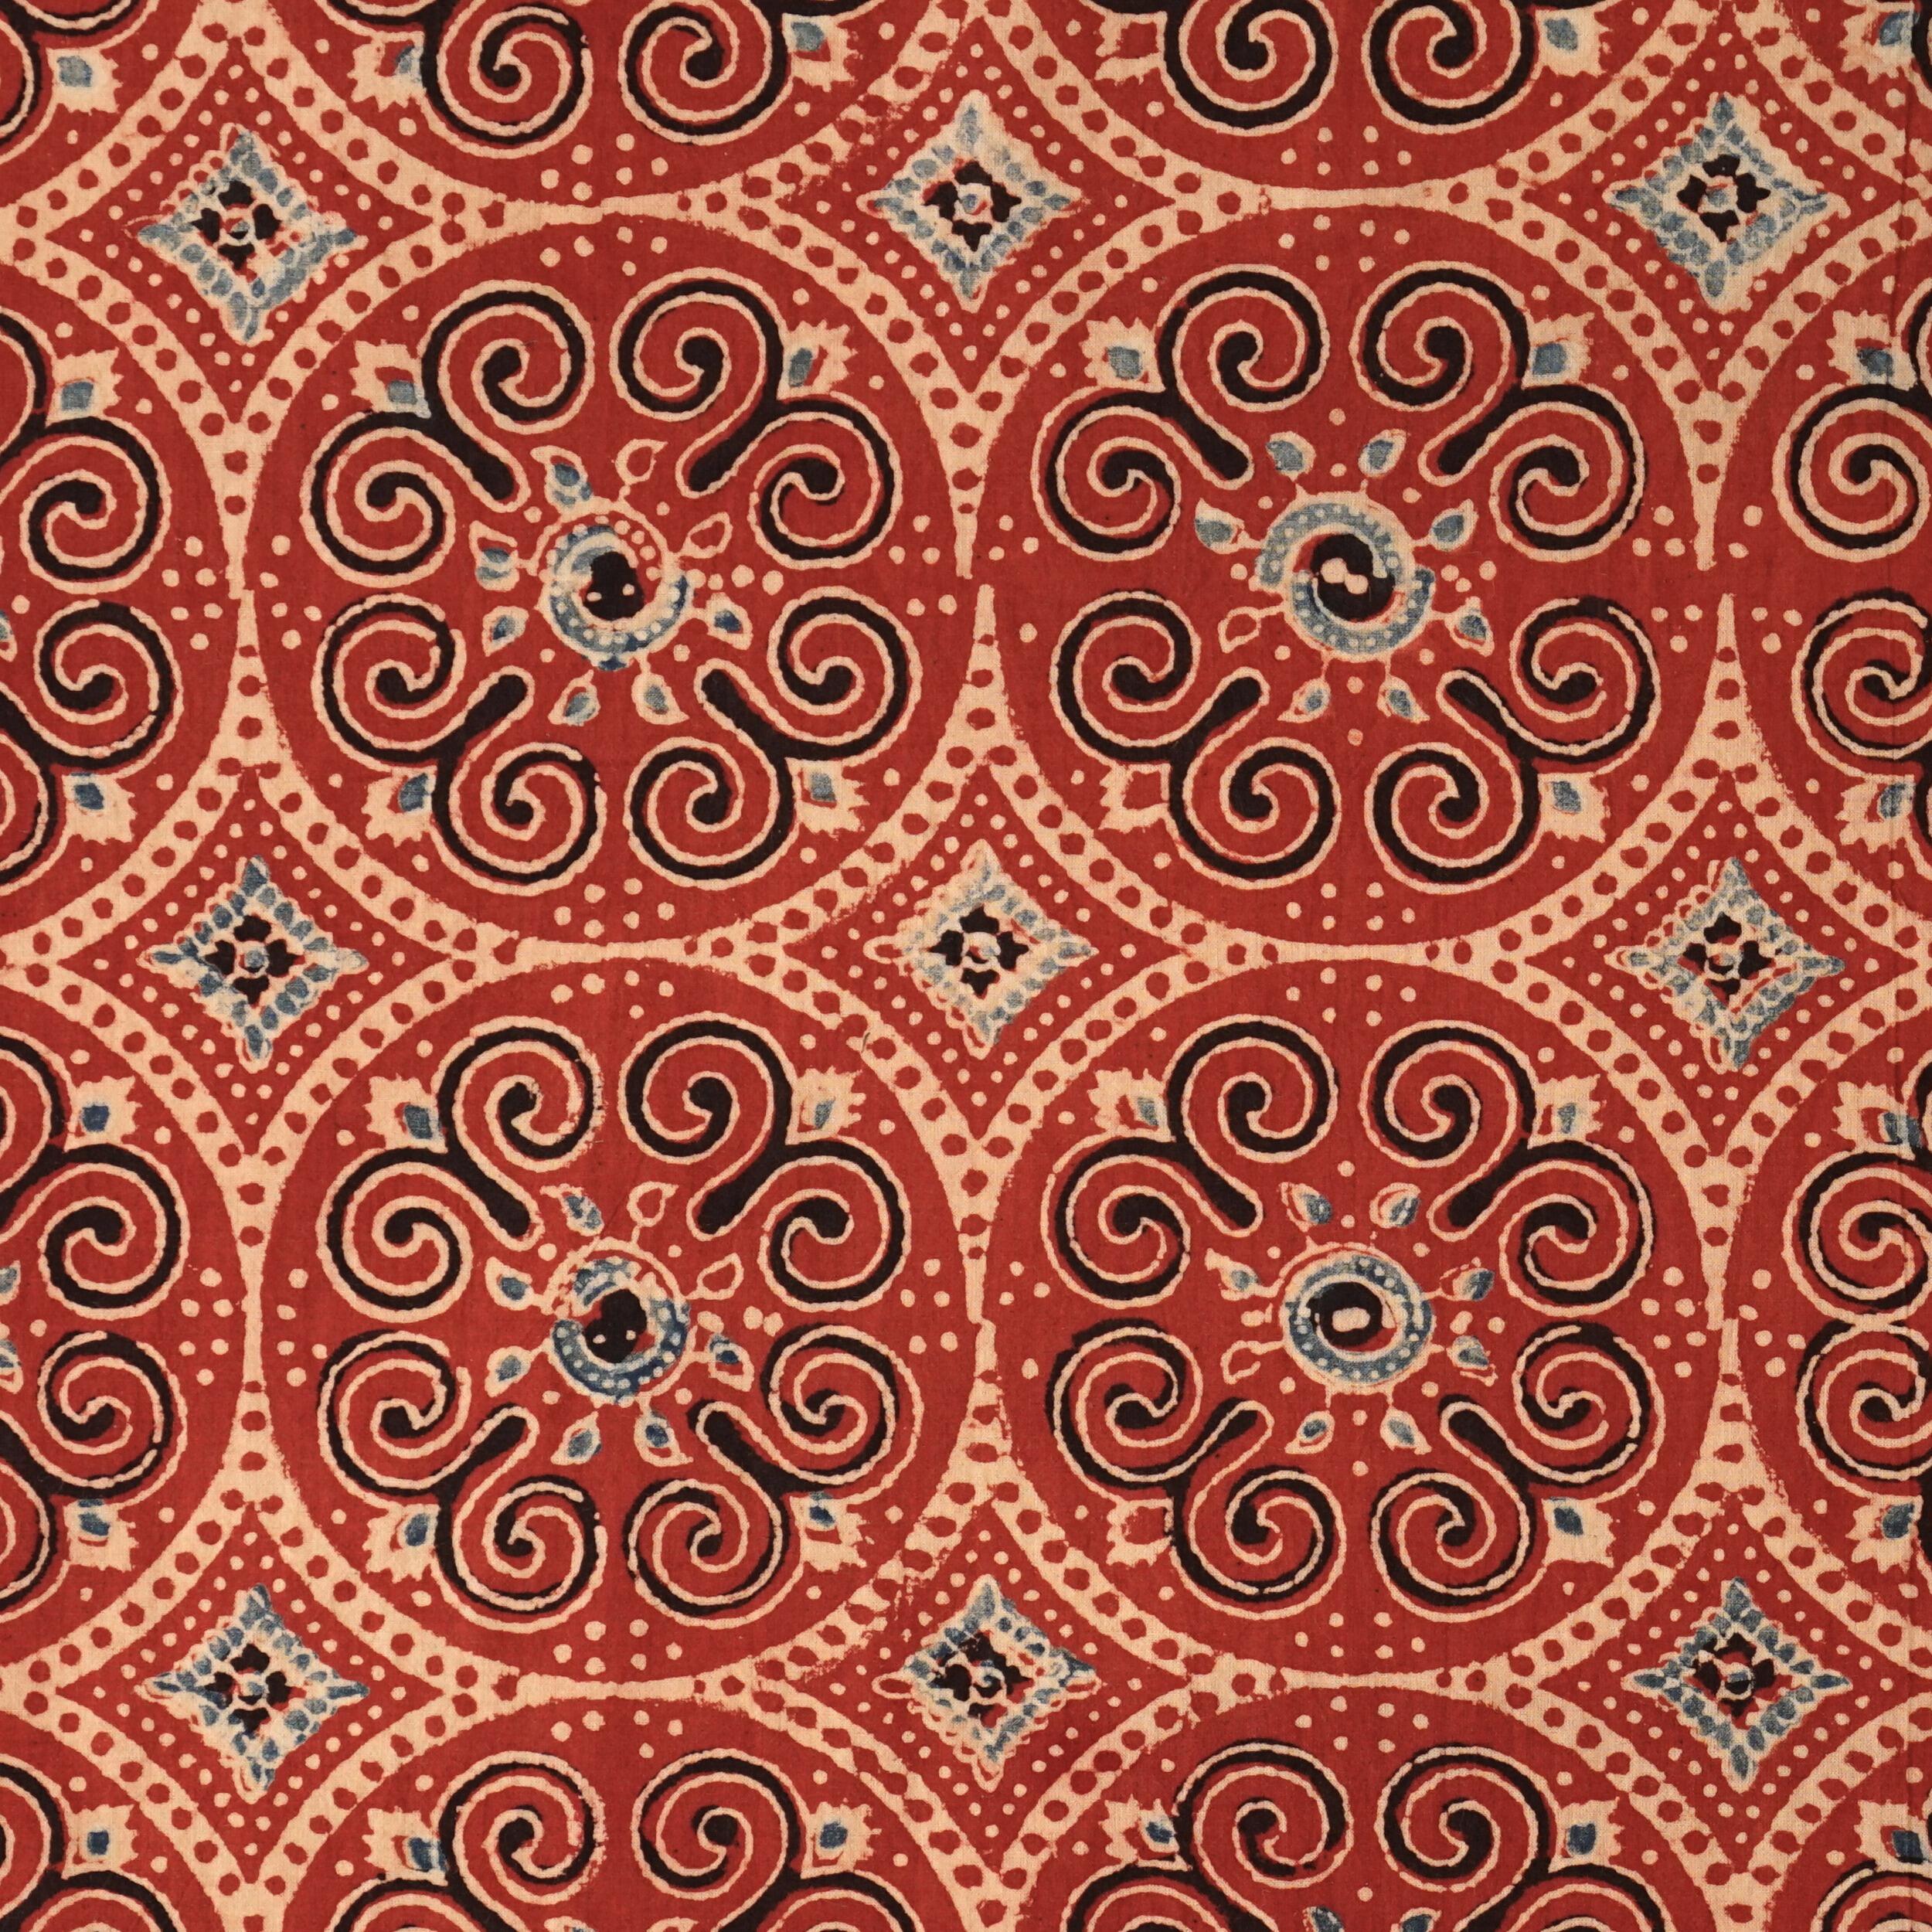 Traditional Ajrak Block-Printed Cotton - Ratatouille Print - Iron Black, Alizarin Red, Indigo - Flat